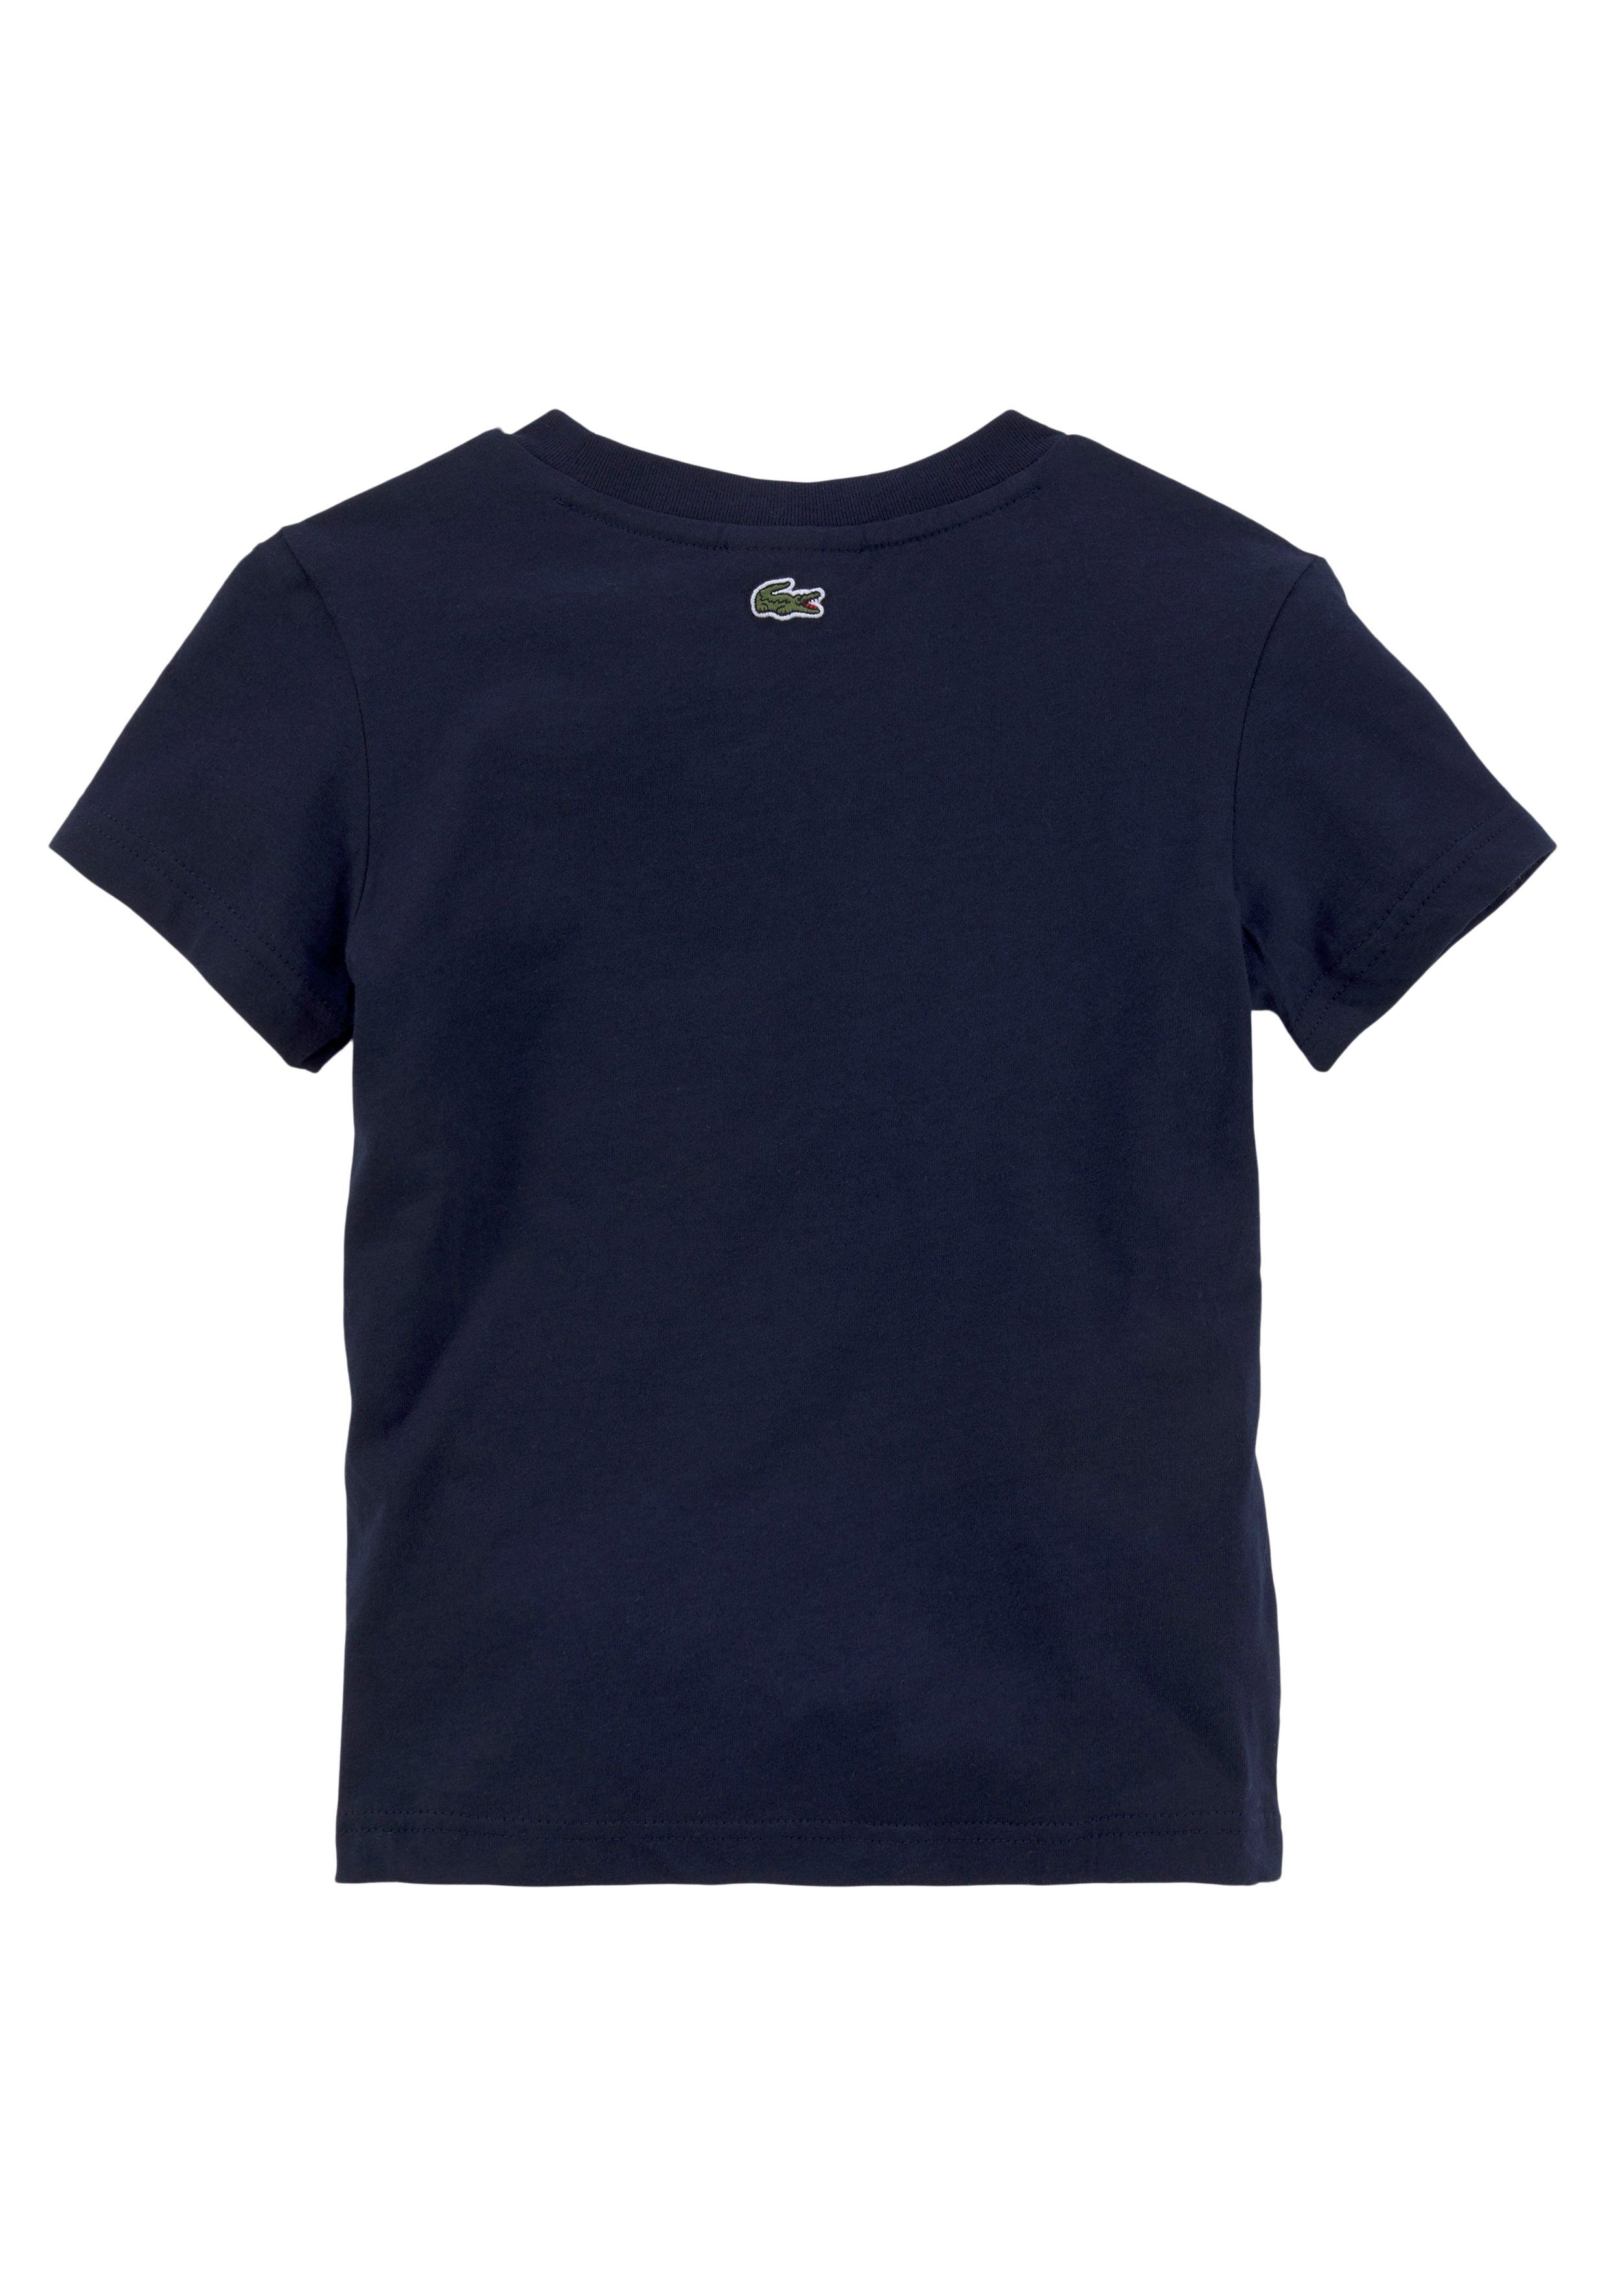 Lacoste T-Shirt mit großem Logodruck blue navy